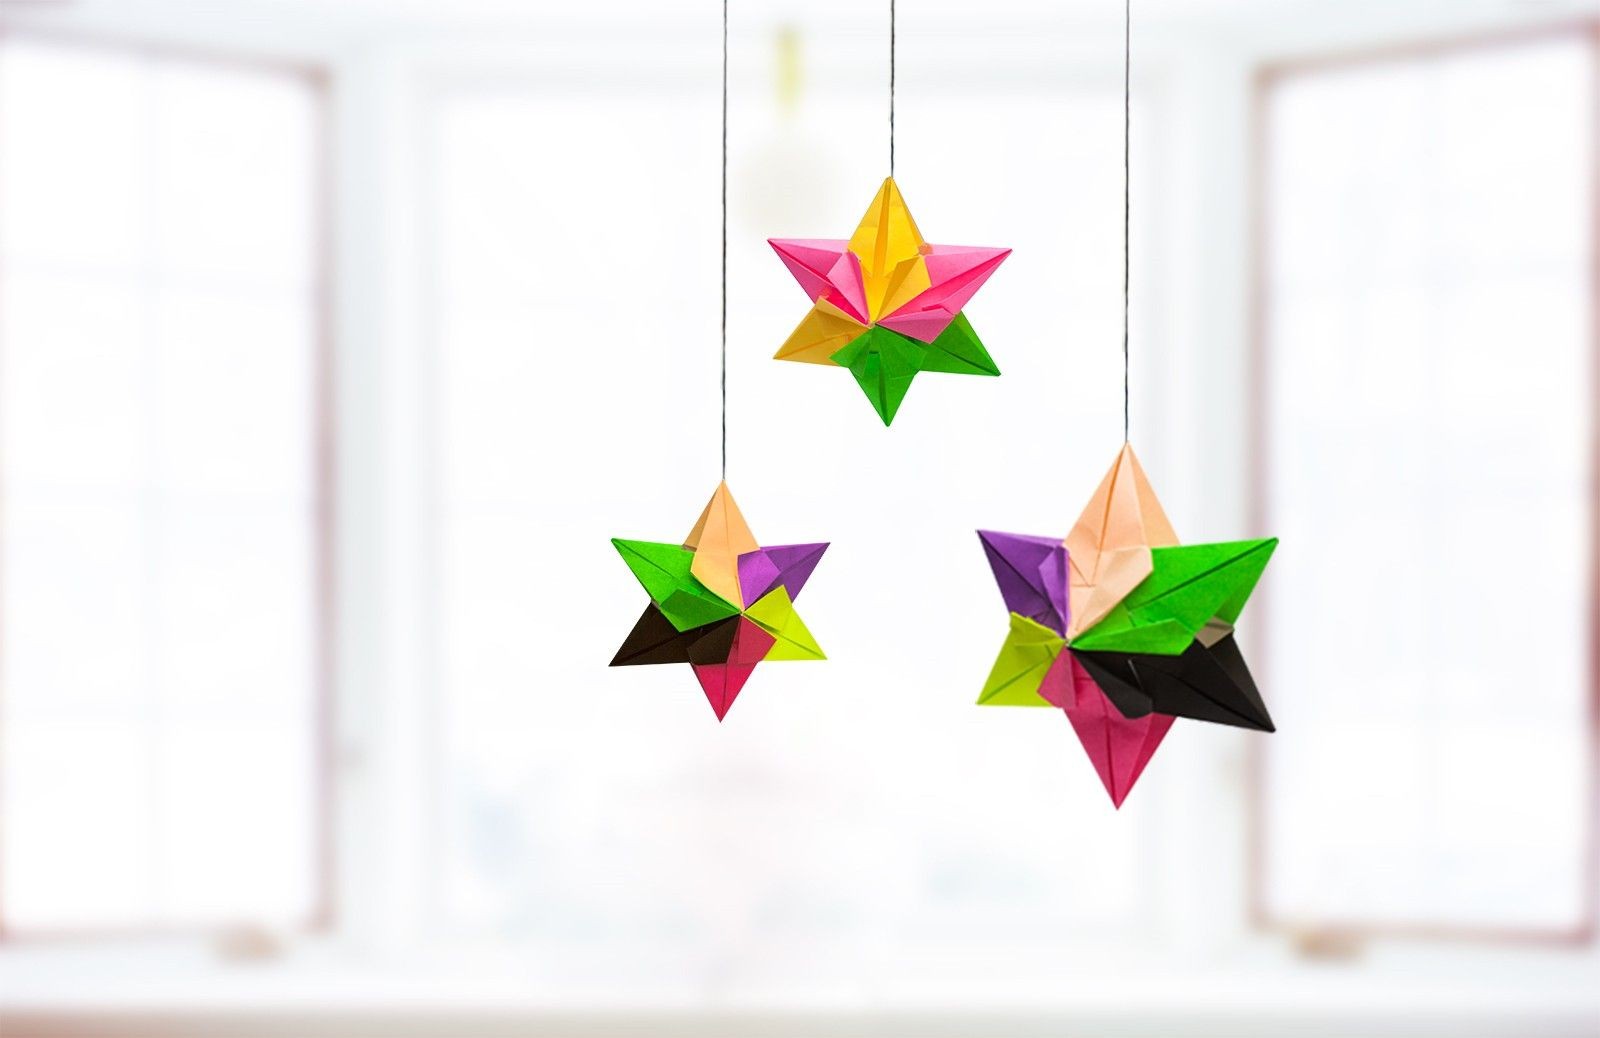 Star Papercraft à¸à¸²à¸£à¸à¸±à¸à¸à¸£à¸°à¸à¸²à¸©à¹à¸à¸à¹à¸¡à¸à¸¹à¸¥à¹à¸²à¹à¸à¹à¸à¸à¸²à¸§à¸ªà¸à¸²à¸£à¸²à¸à¸´à¸ª Modular origami Sparaxis Star